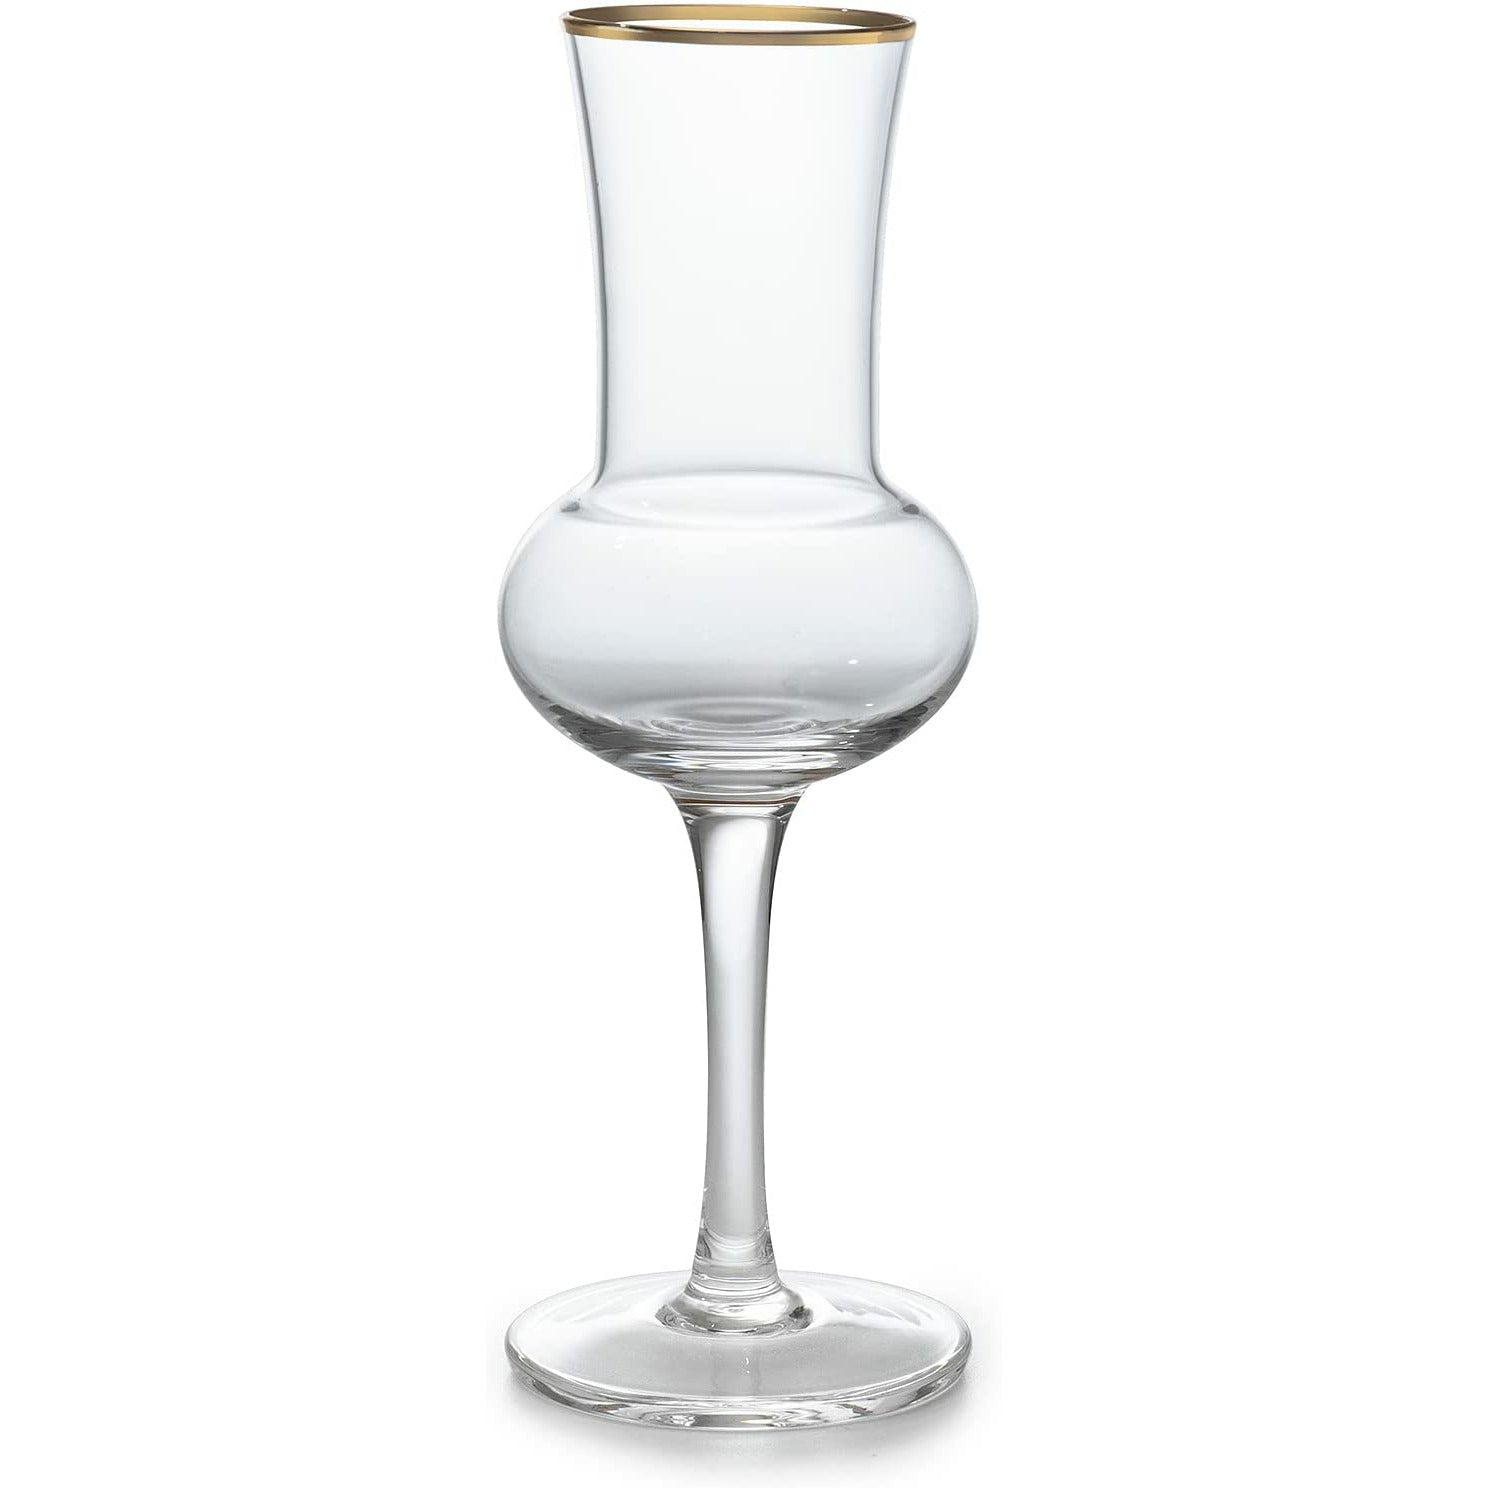 The Wine Savant Crystal Set of 6 Grappa Glasses 3oz Post Dinner